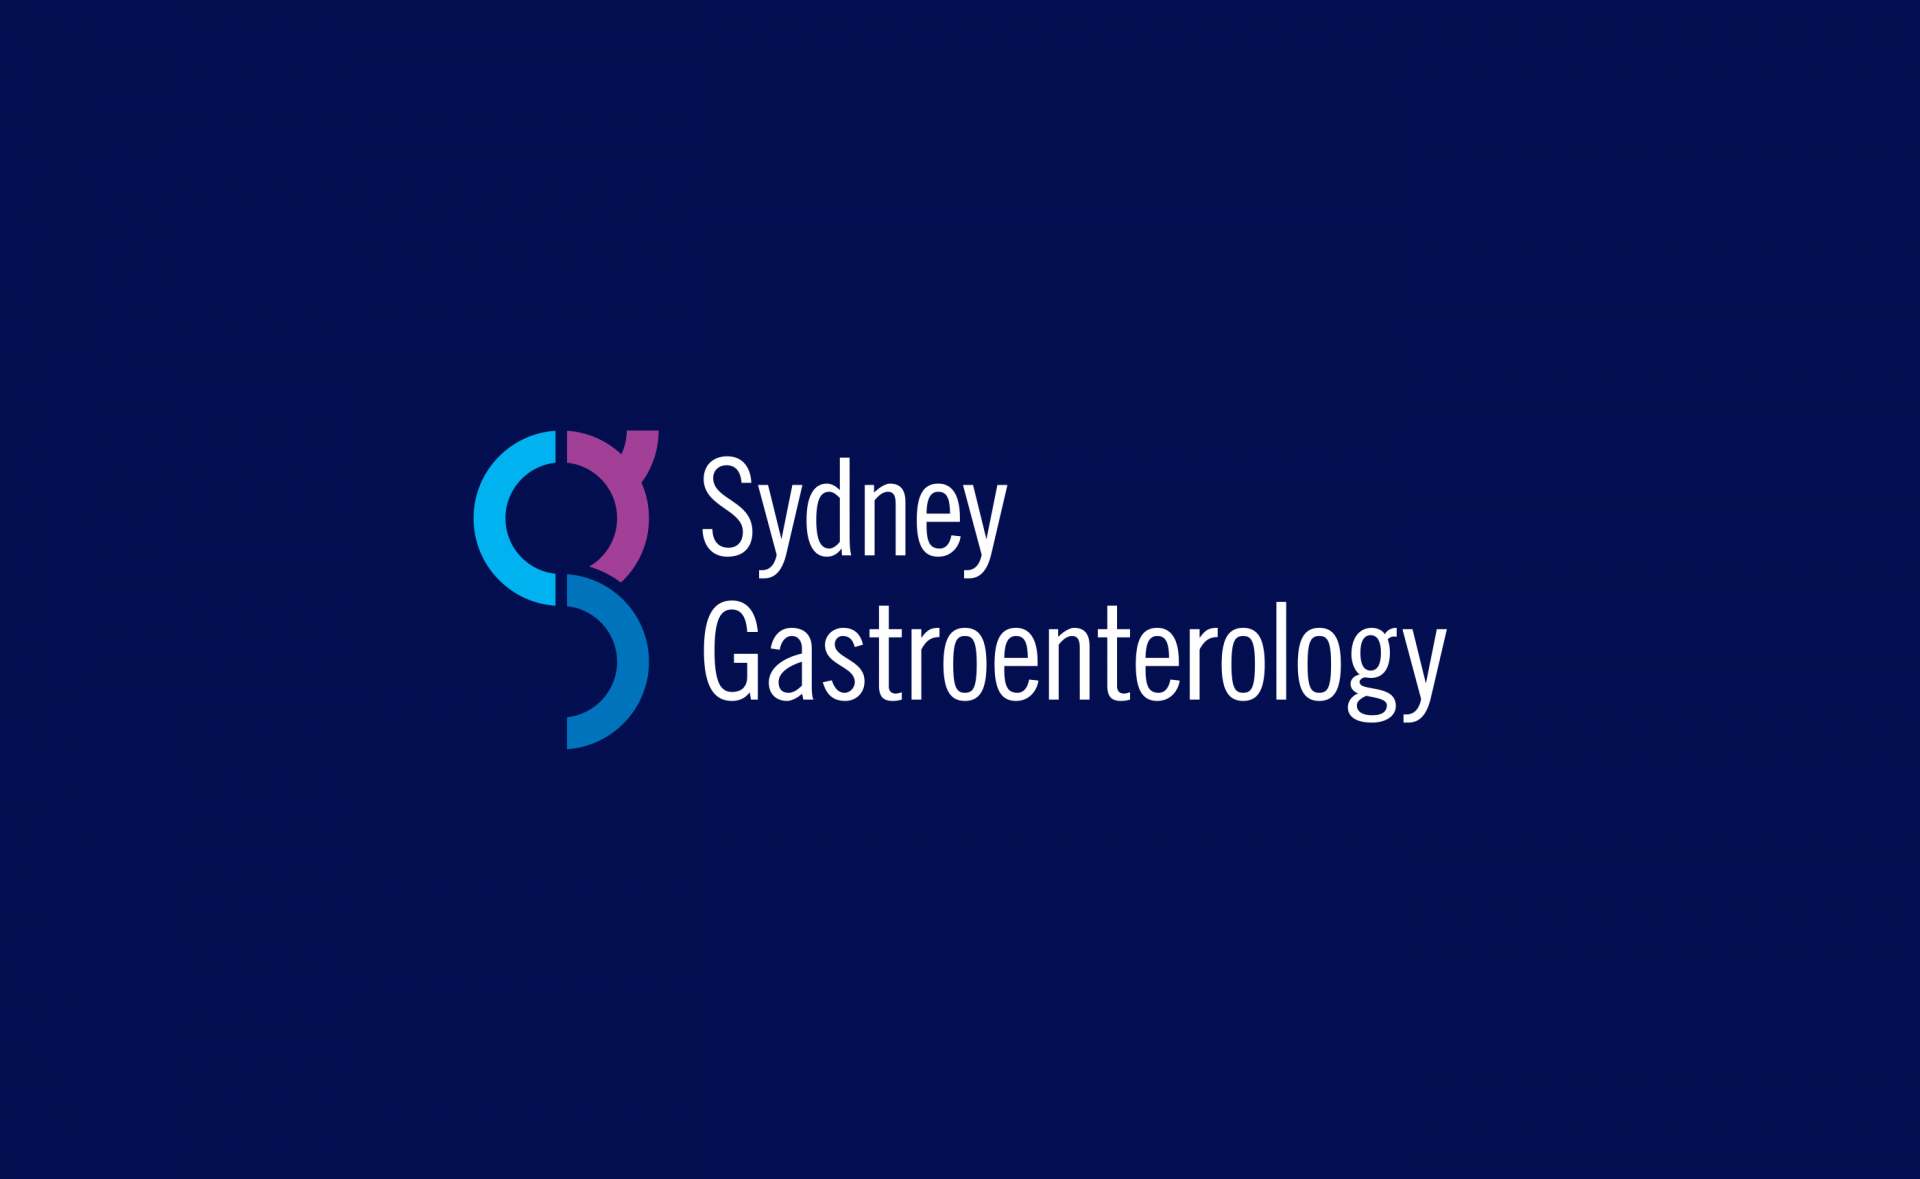 Sydney Gastroenterology Medical Branding